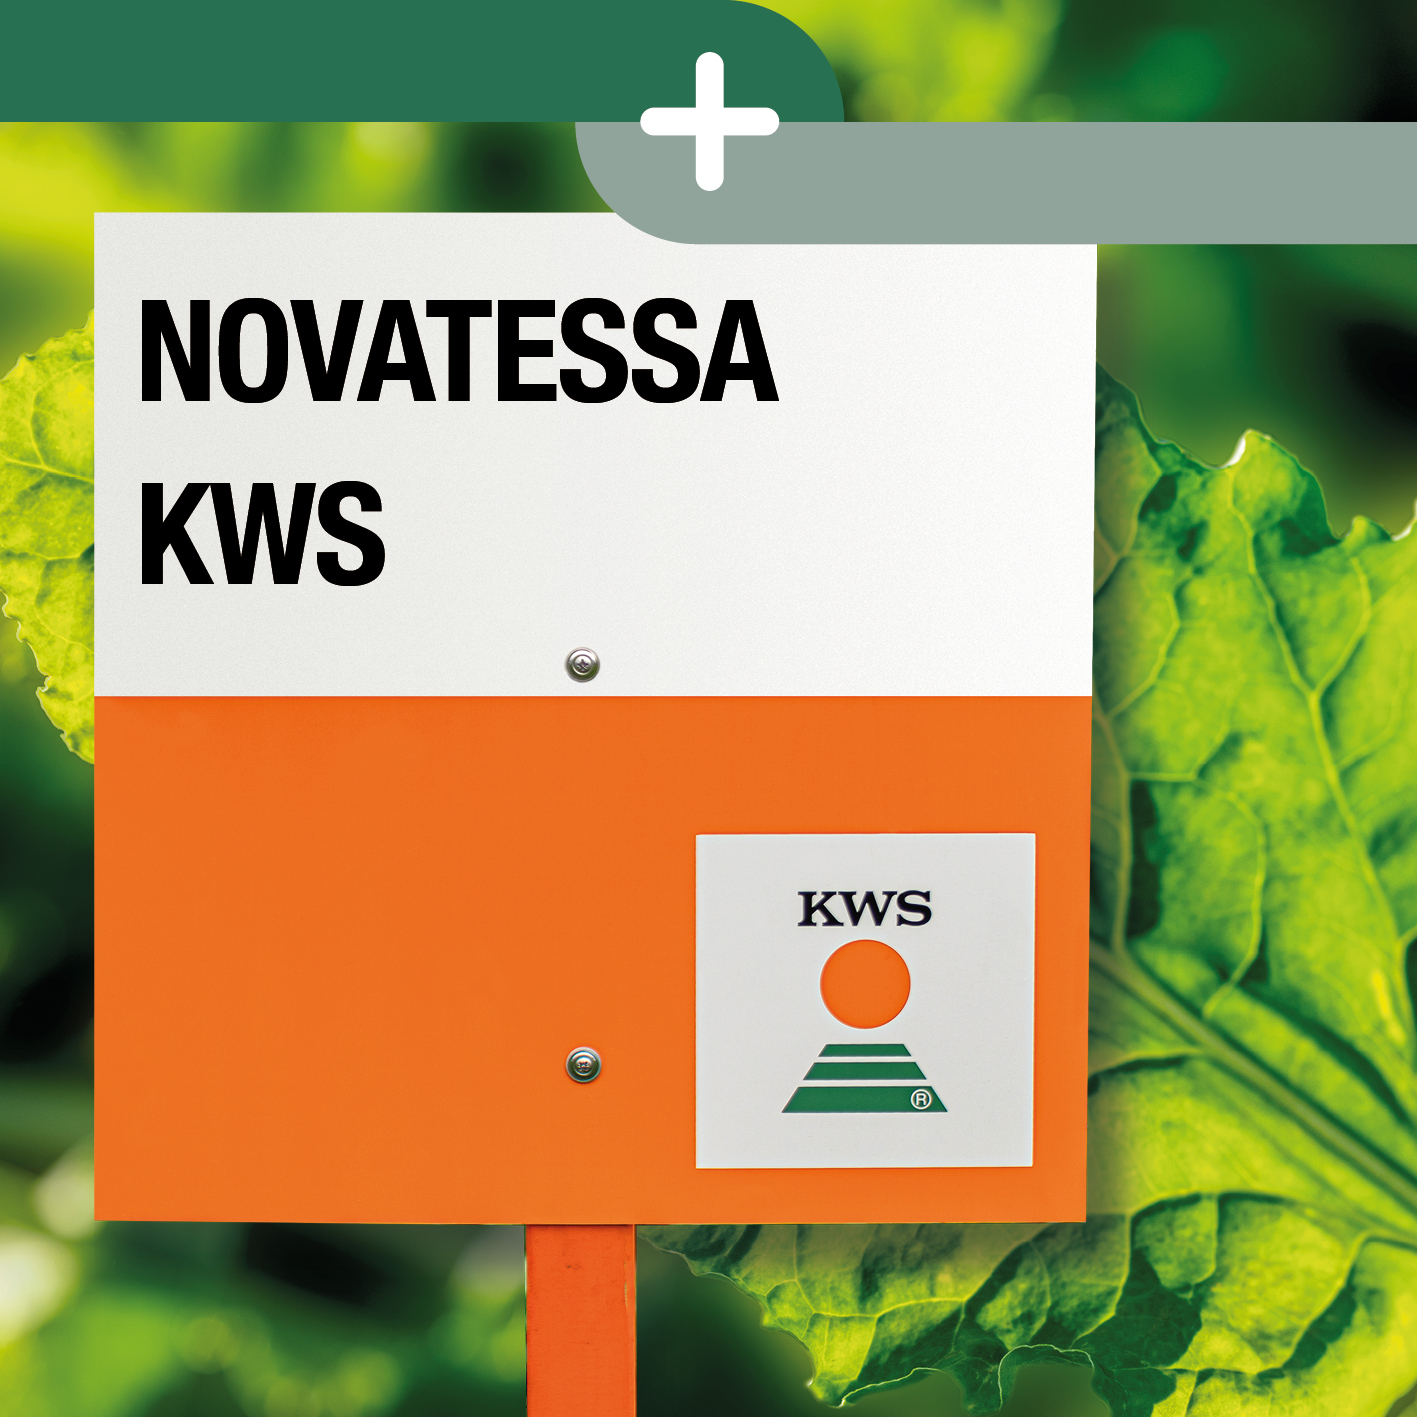 NOVATESSA KWS energy